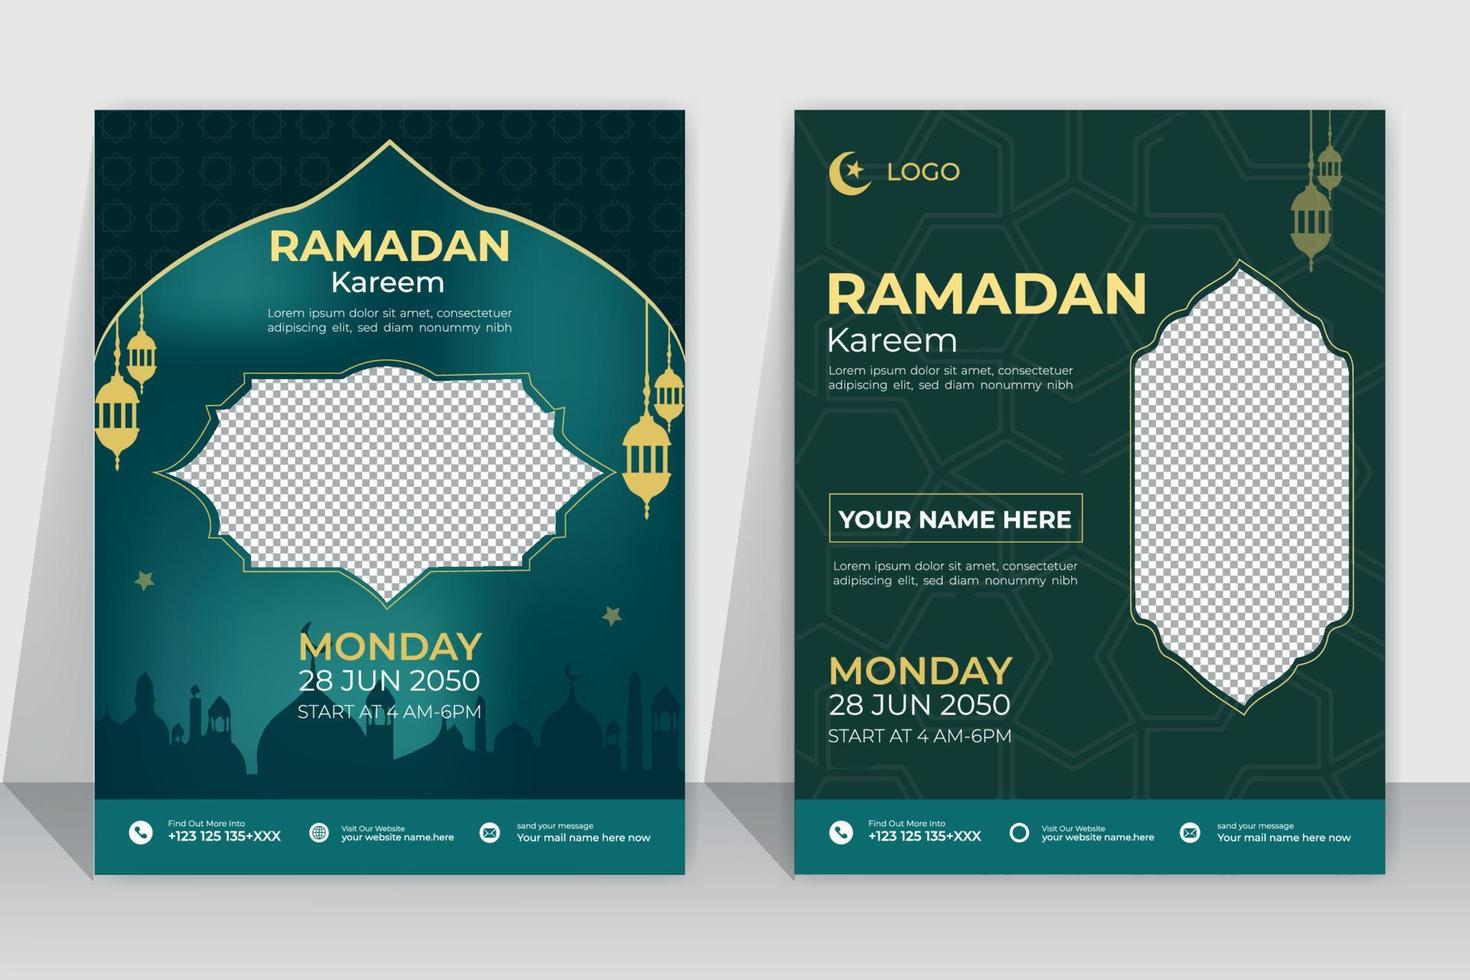 ramadan flye Template. for ifter praty. Ramadan sale social media and marketing post. Social media banner template. vector